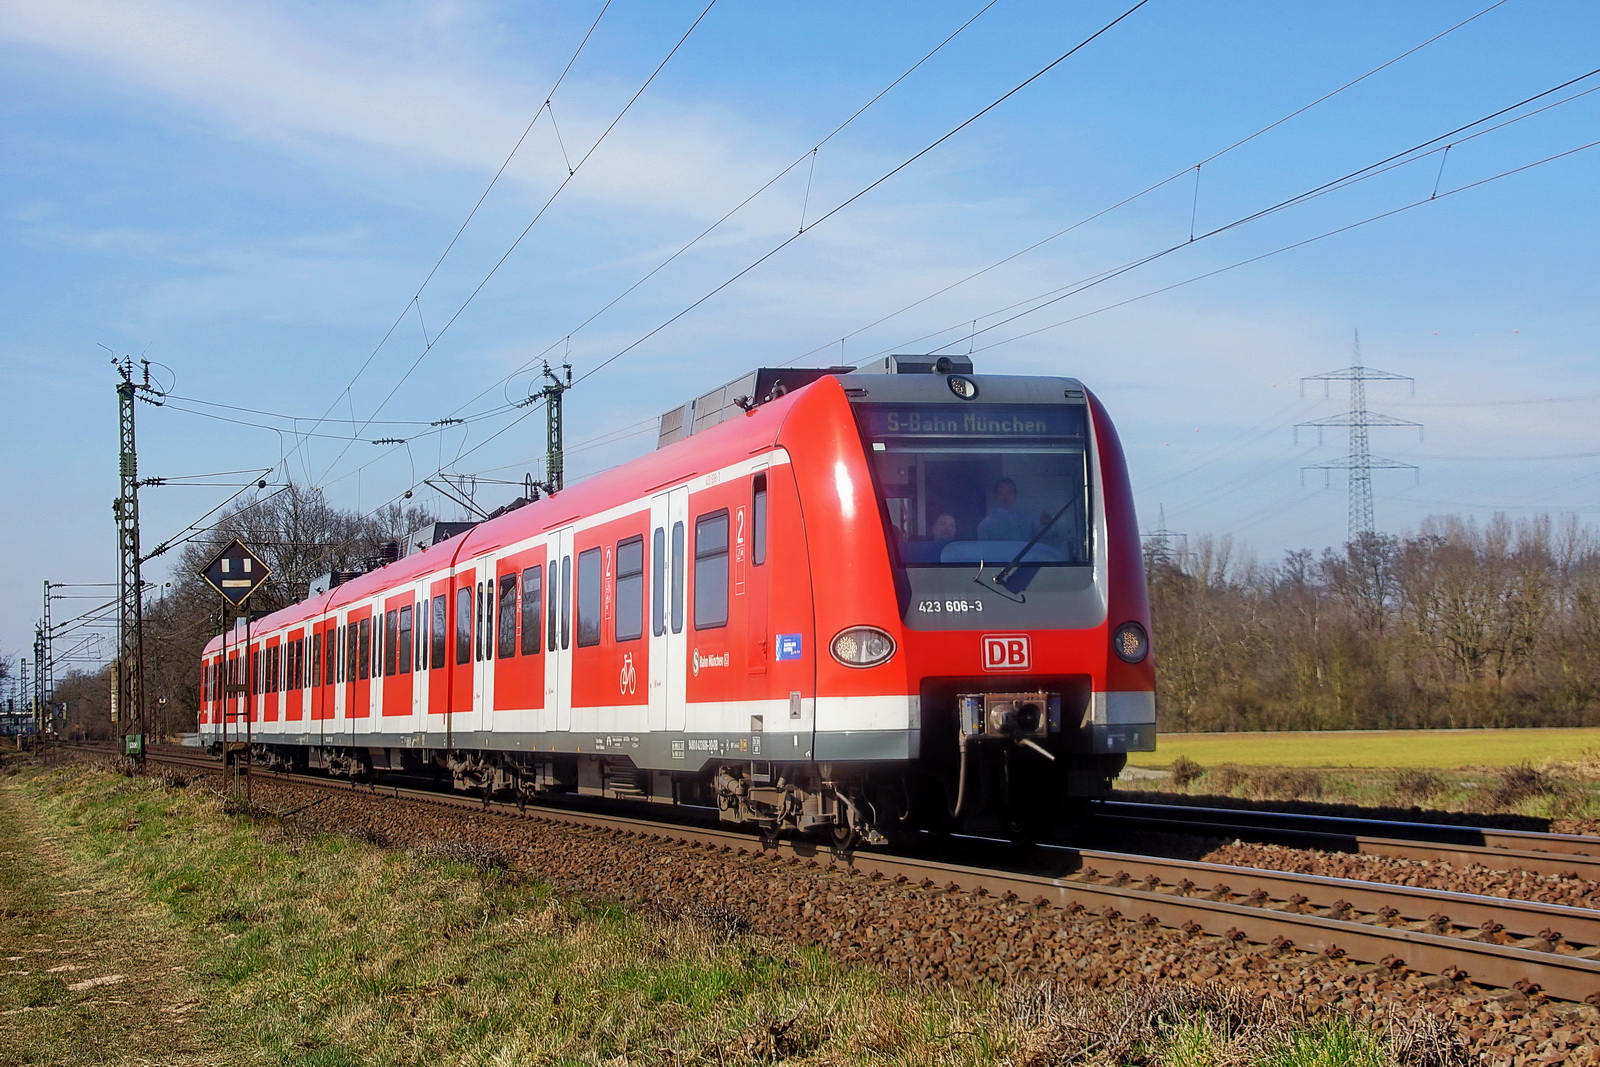 423 606-3 S-Bahn München